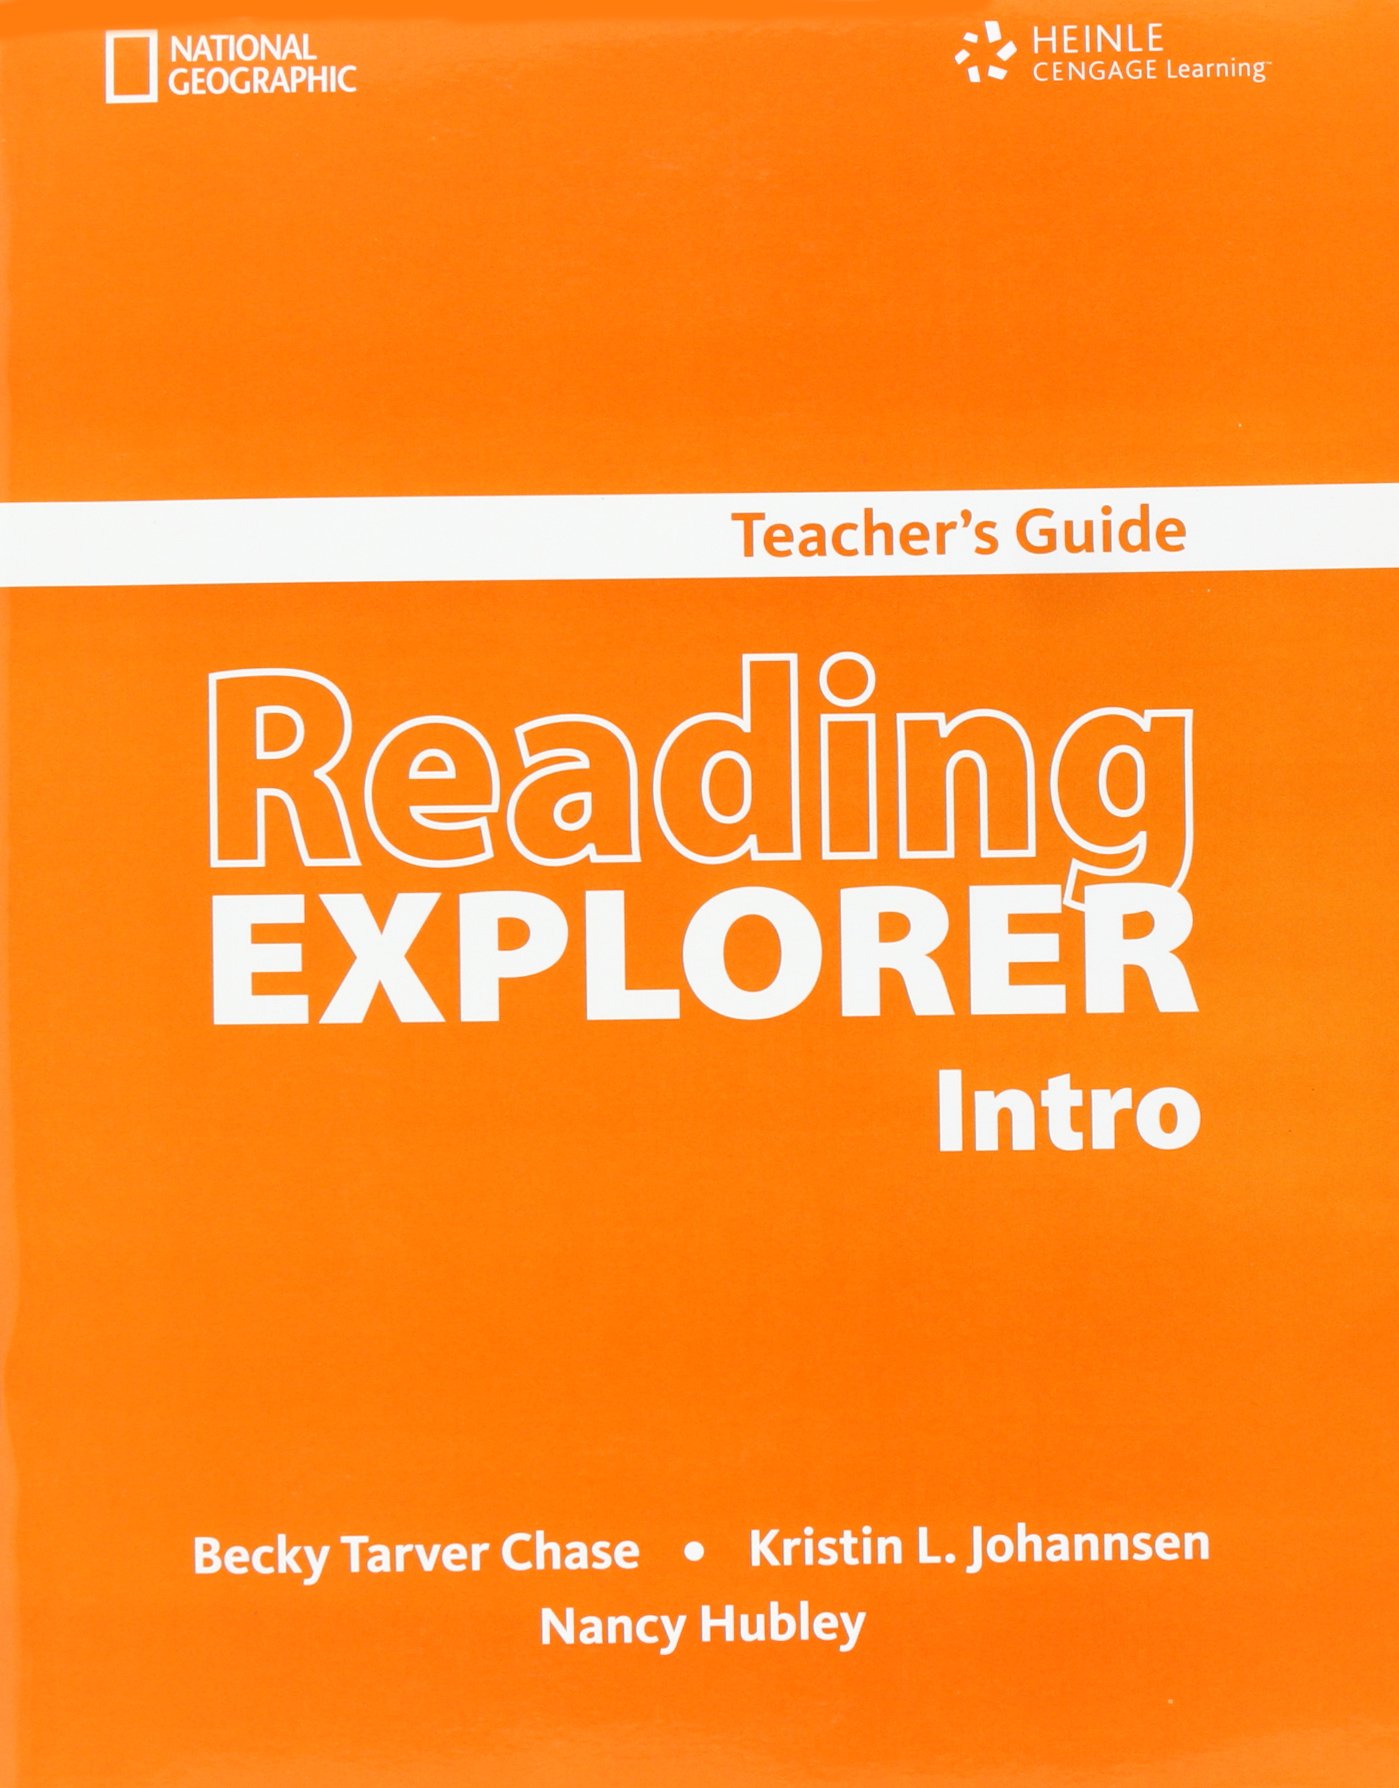 READING EXPLORER INTRO Teacher's Guide